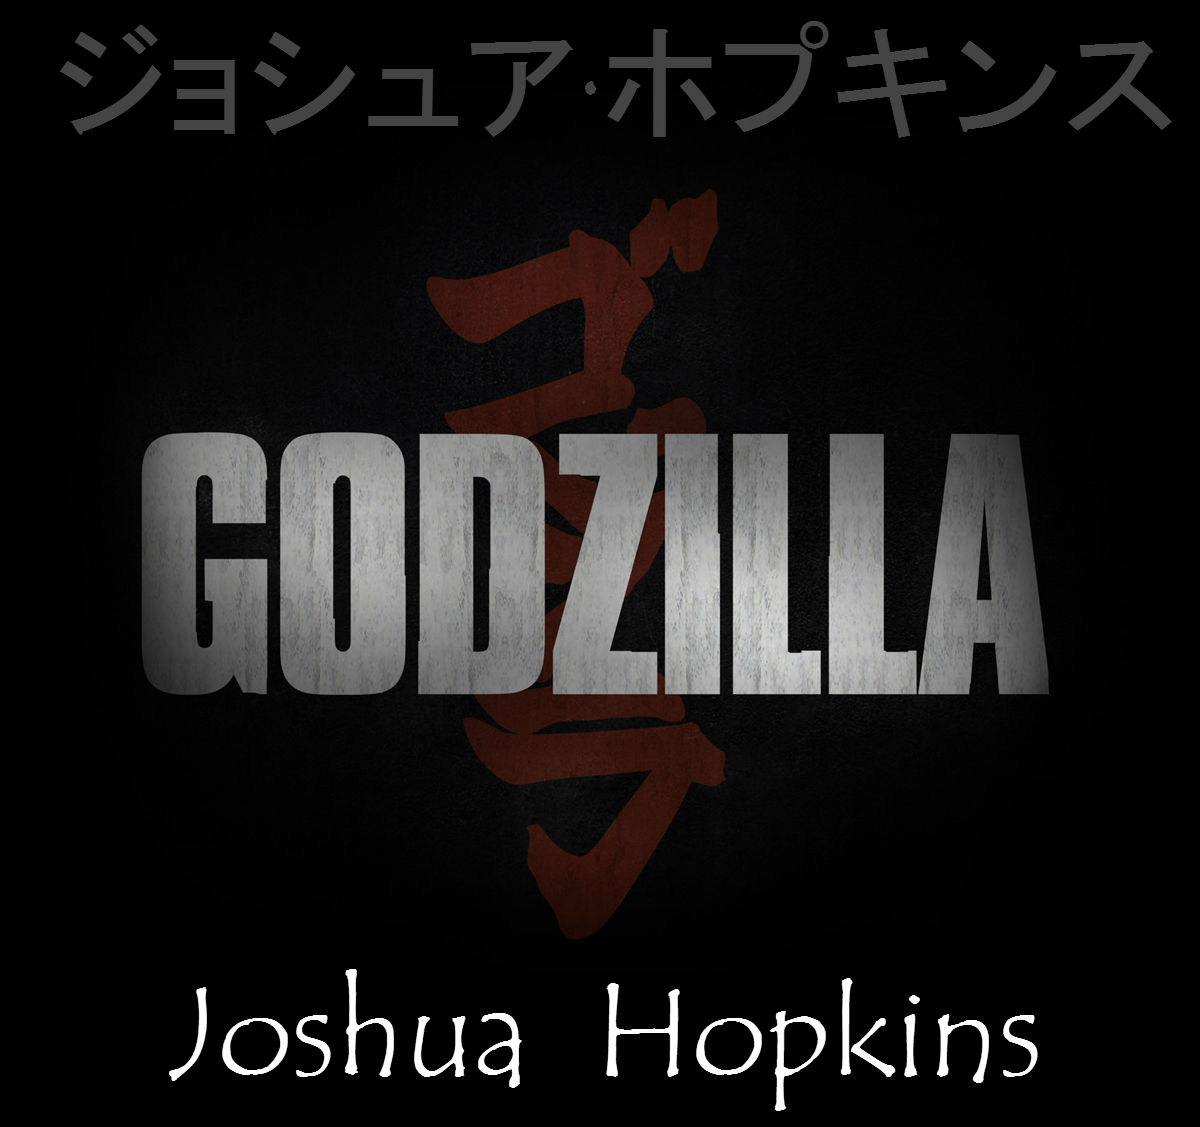 Favorite Godzilla film!? ROUND 3